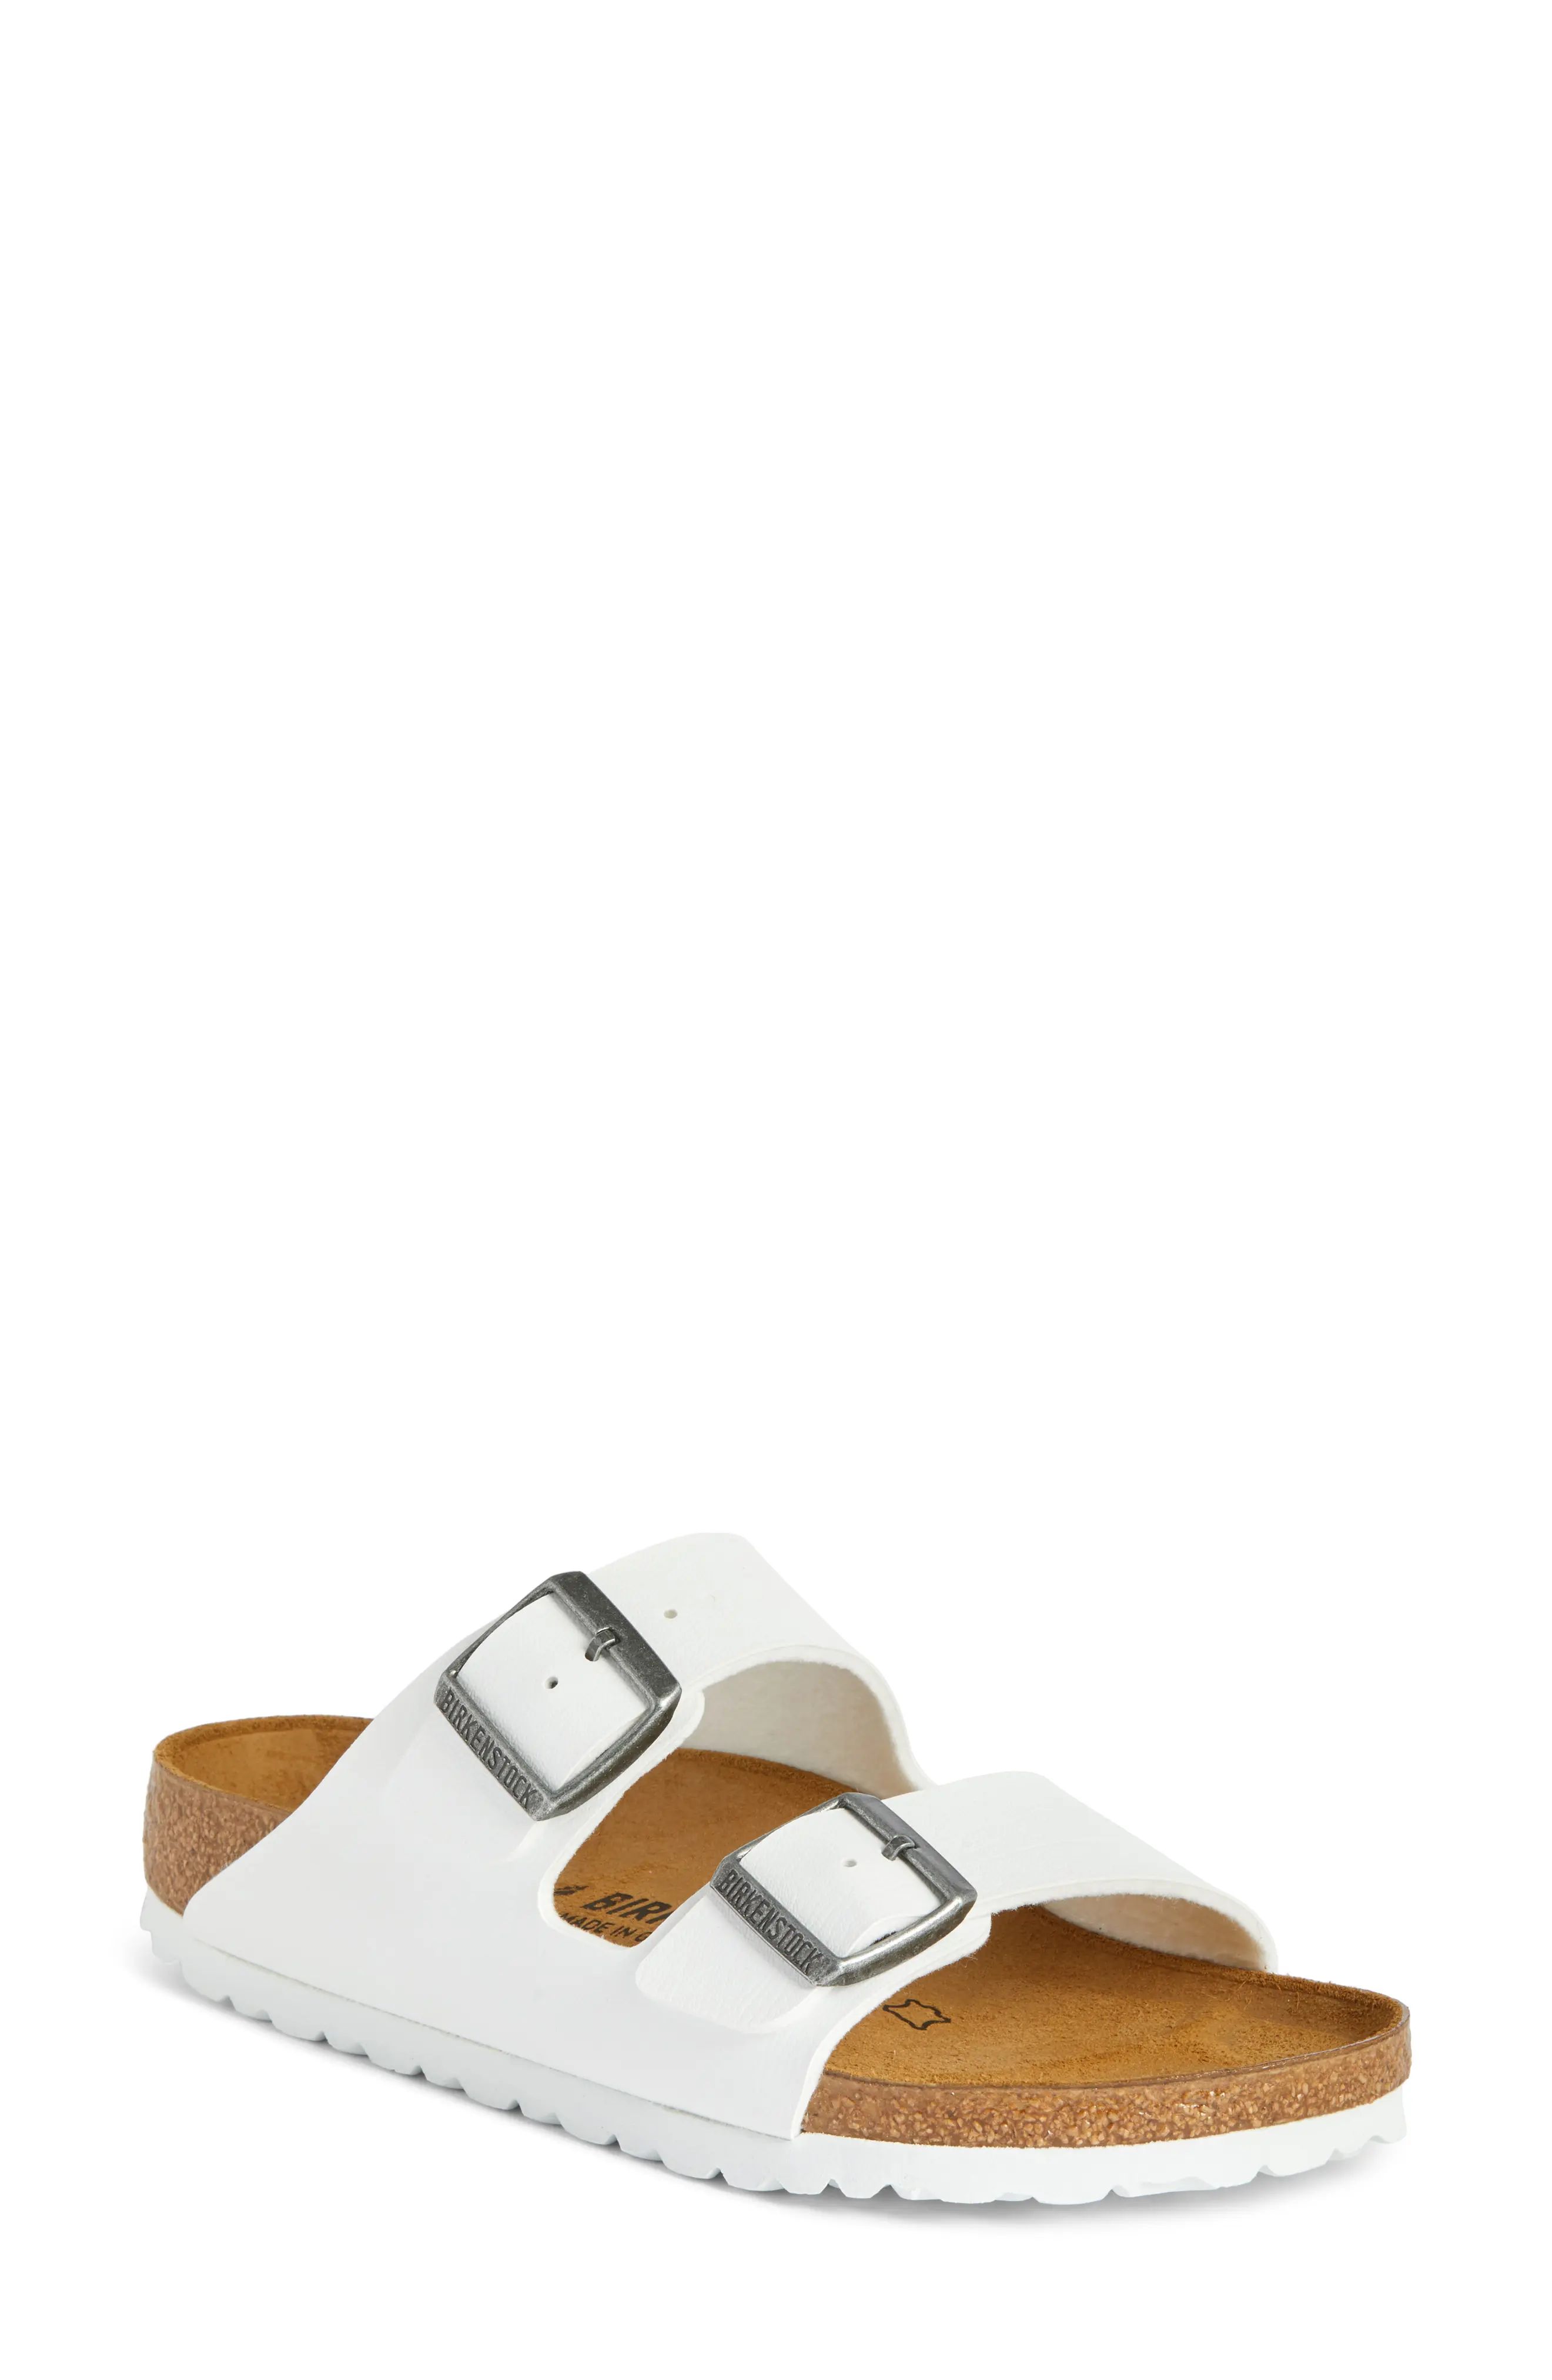 Birkenstock Arizona Birko-Flor Sandal in White Synthetic Leather at Nordstrom, Size 9-9.5Us | Nordstrom